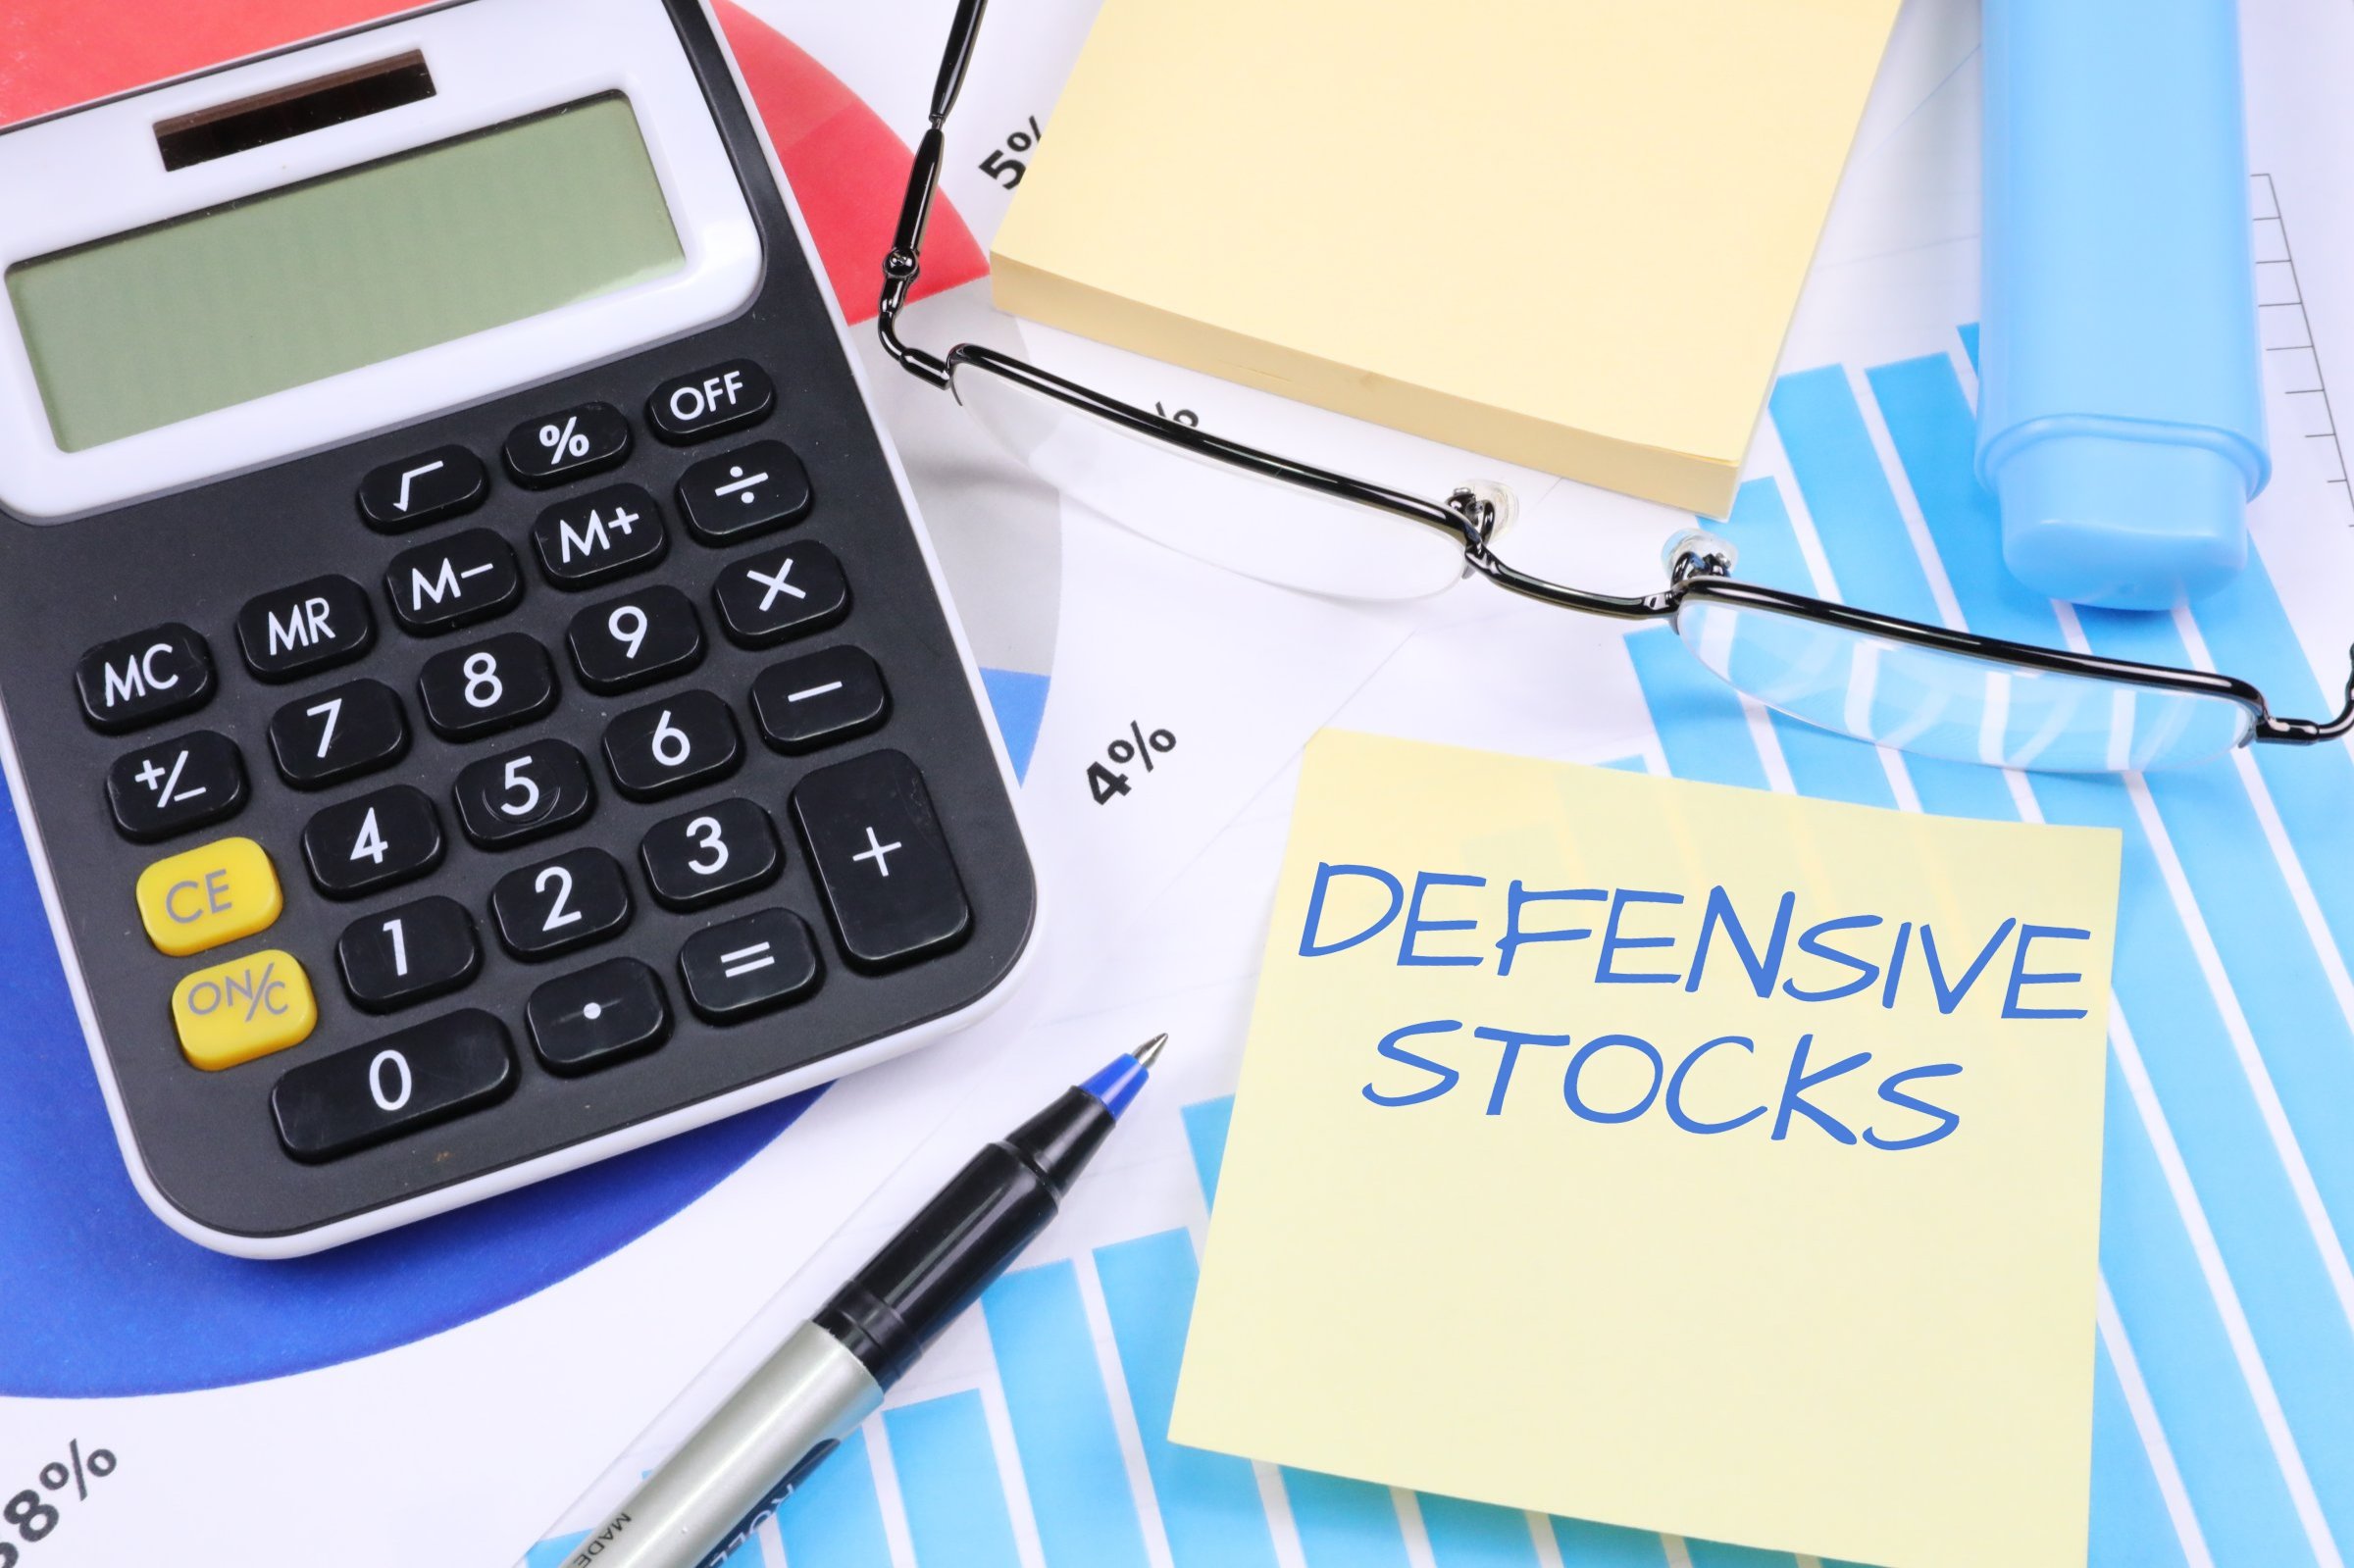 Defensive Stocks